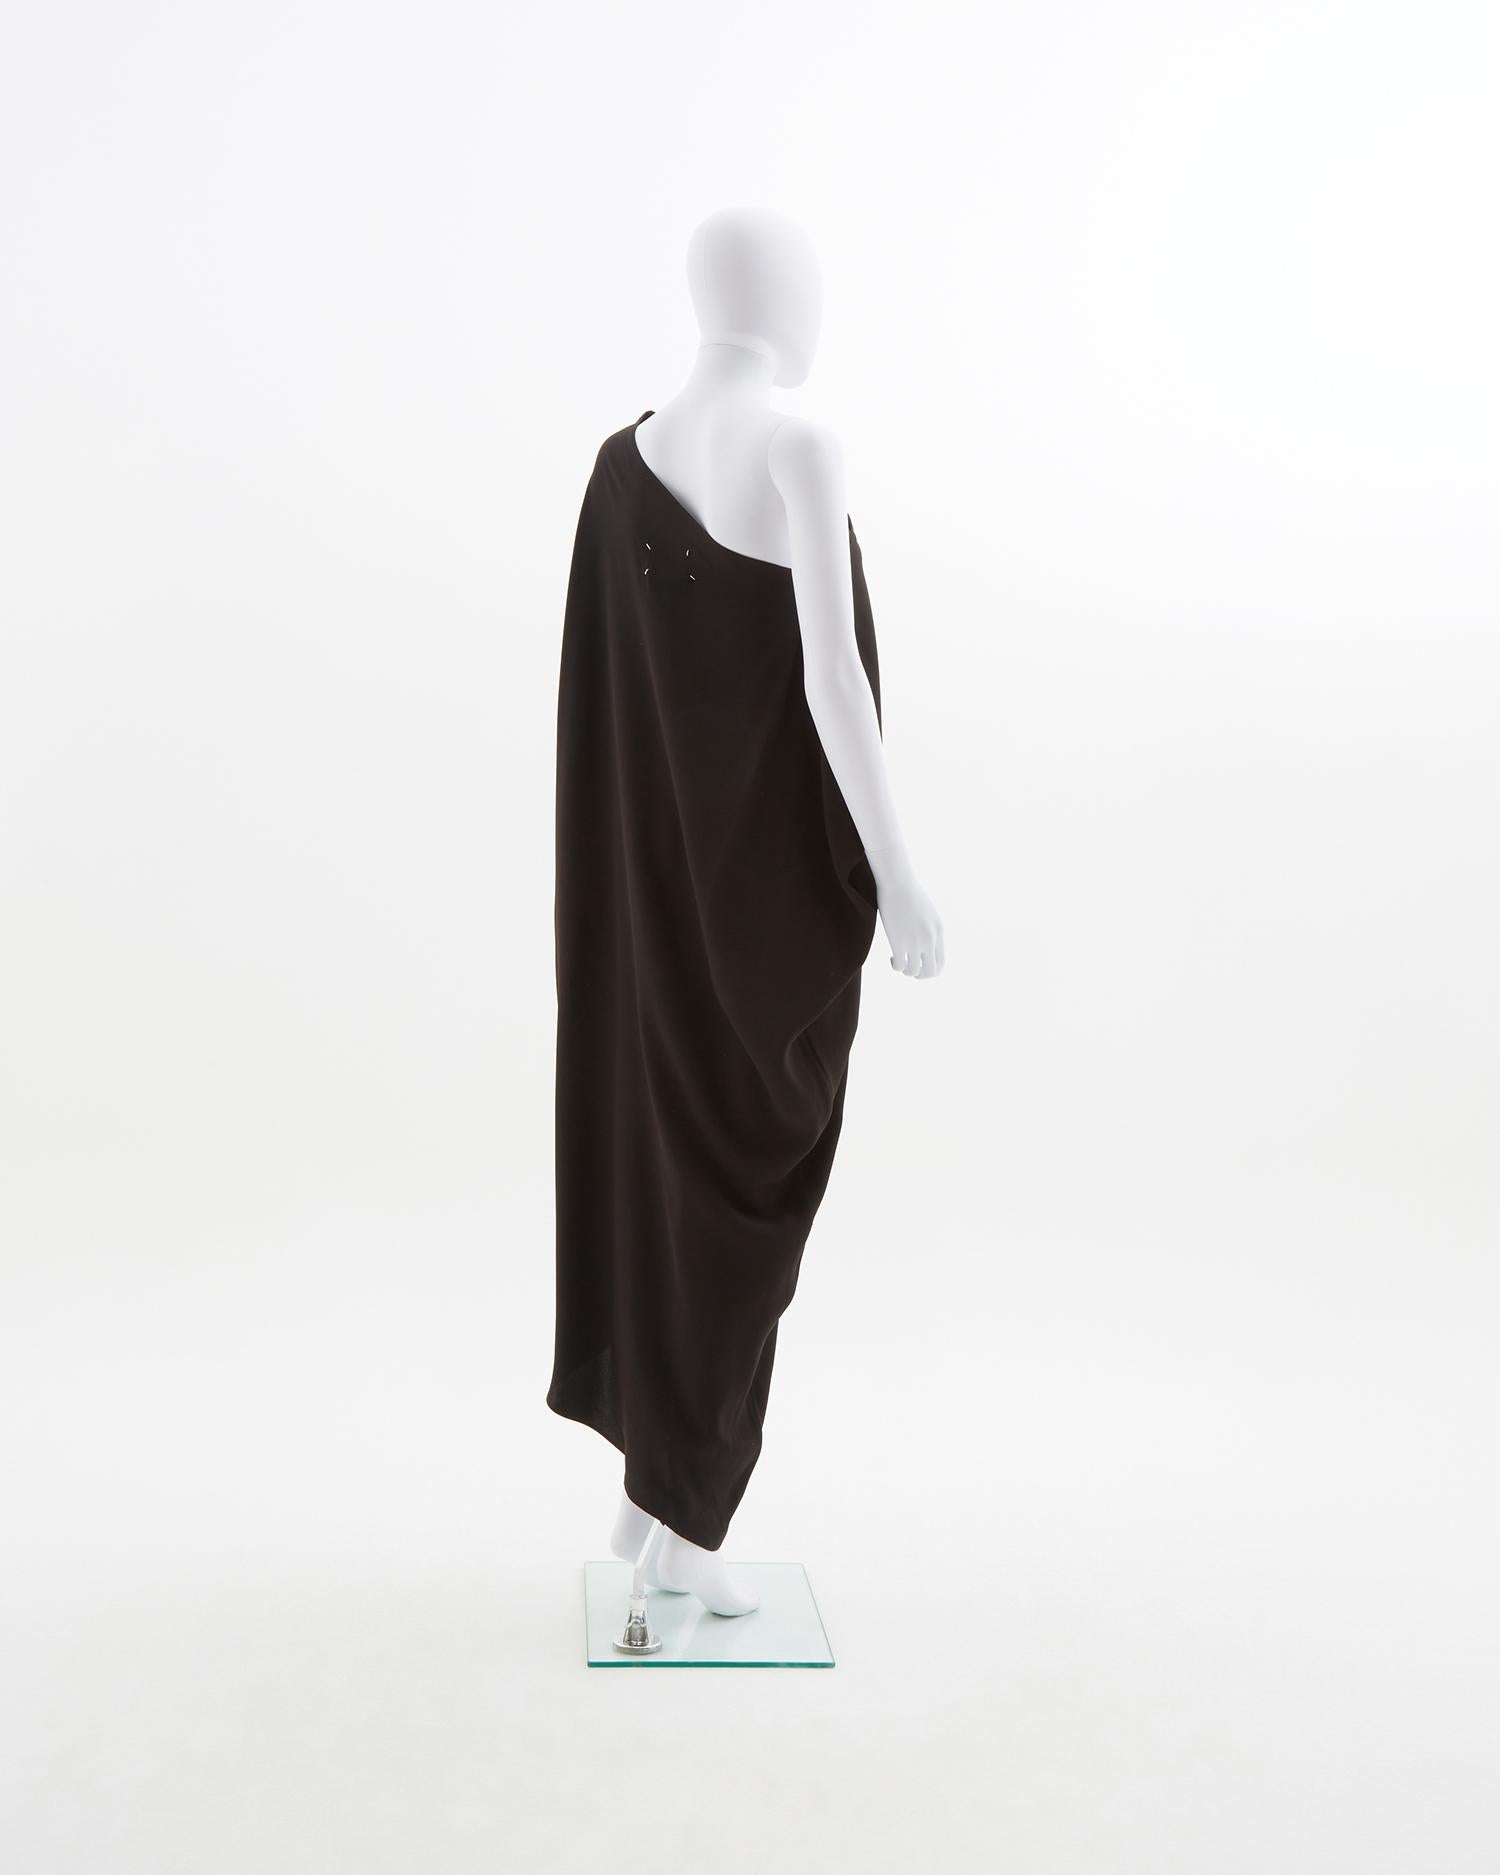 - Runway Look 6
- Sold by Skof.Archive
- Designed by Martin Margiela
- Black one shoulder evening dress
- Fit over to the body
- Fall Winter 2008

Size : FR 38 - EN 42 - UK 10 - US 8 (EU)

Shoulder 91 cm / 36